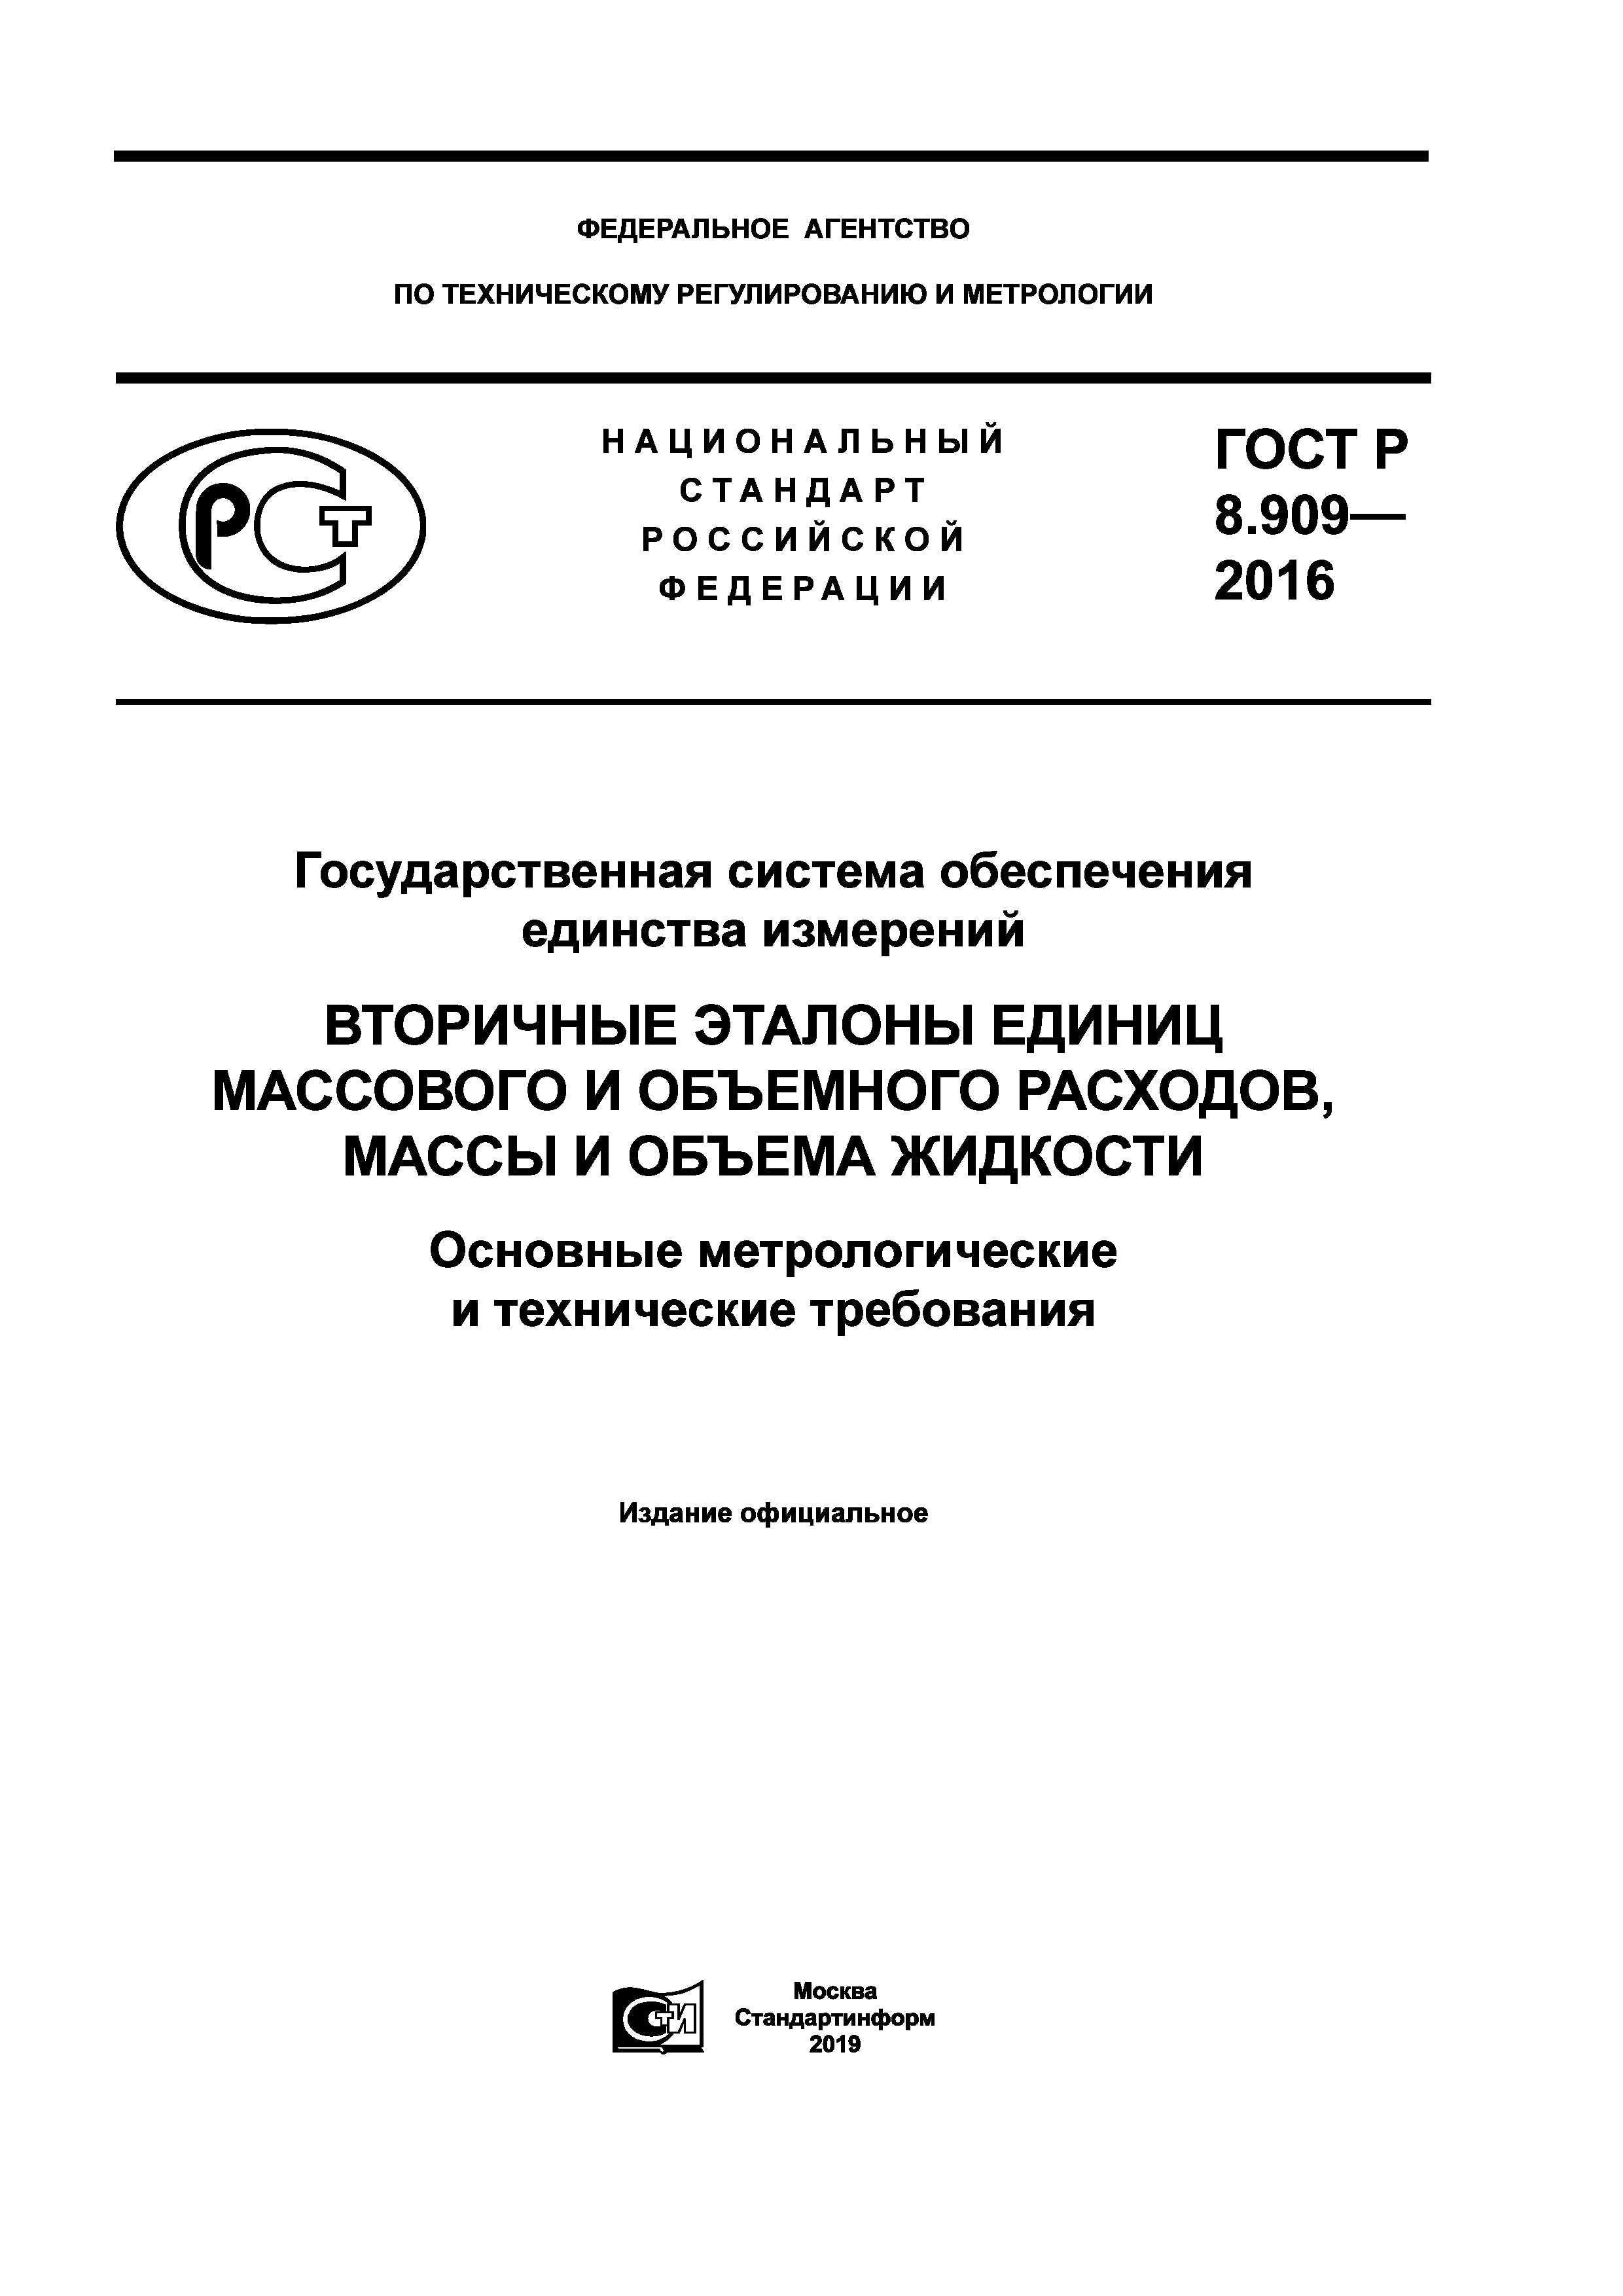 ГОСТ Р 8.909-2016